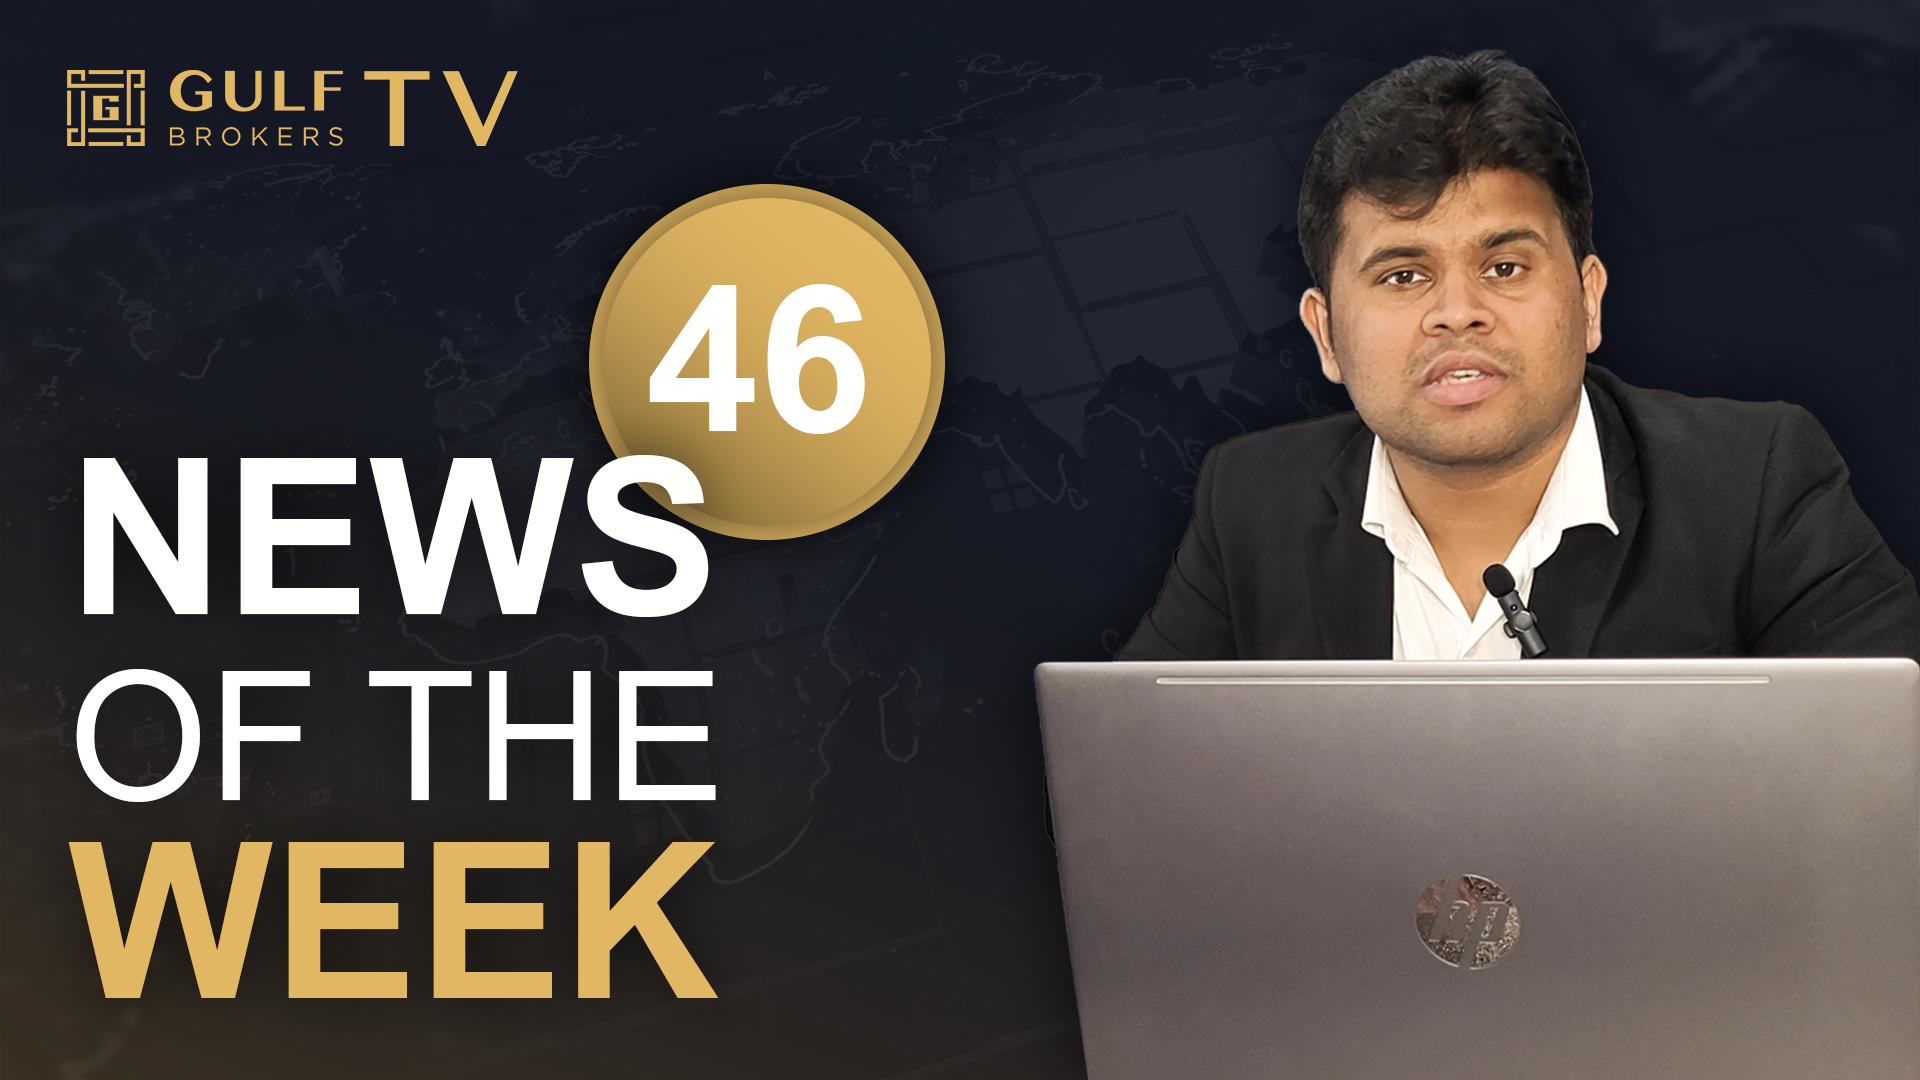 Gulfbrokers | Gulf Brokers | News of the week 46 | Syam KP